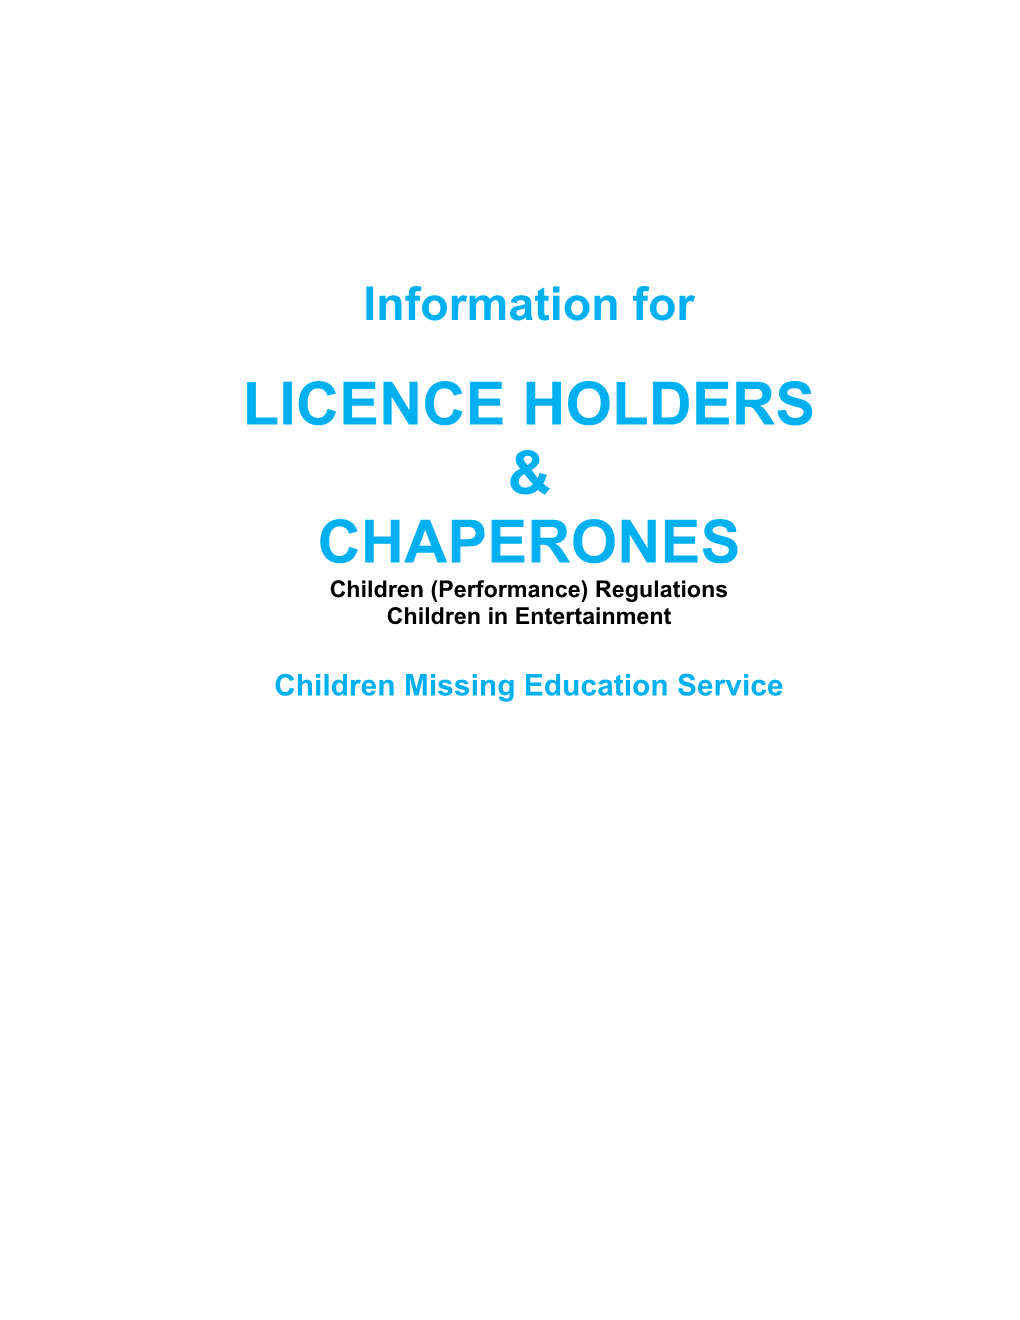 Children (Performance) Regulations